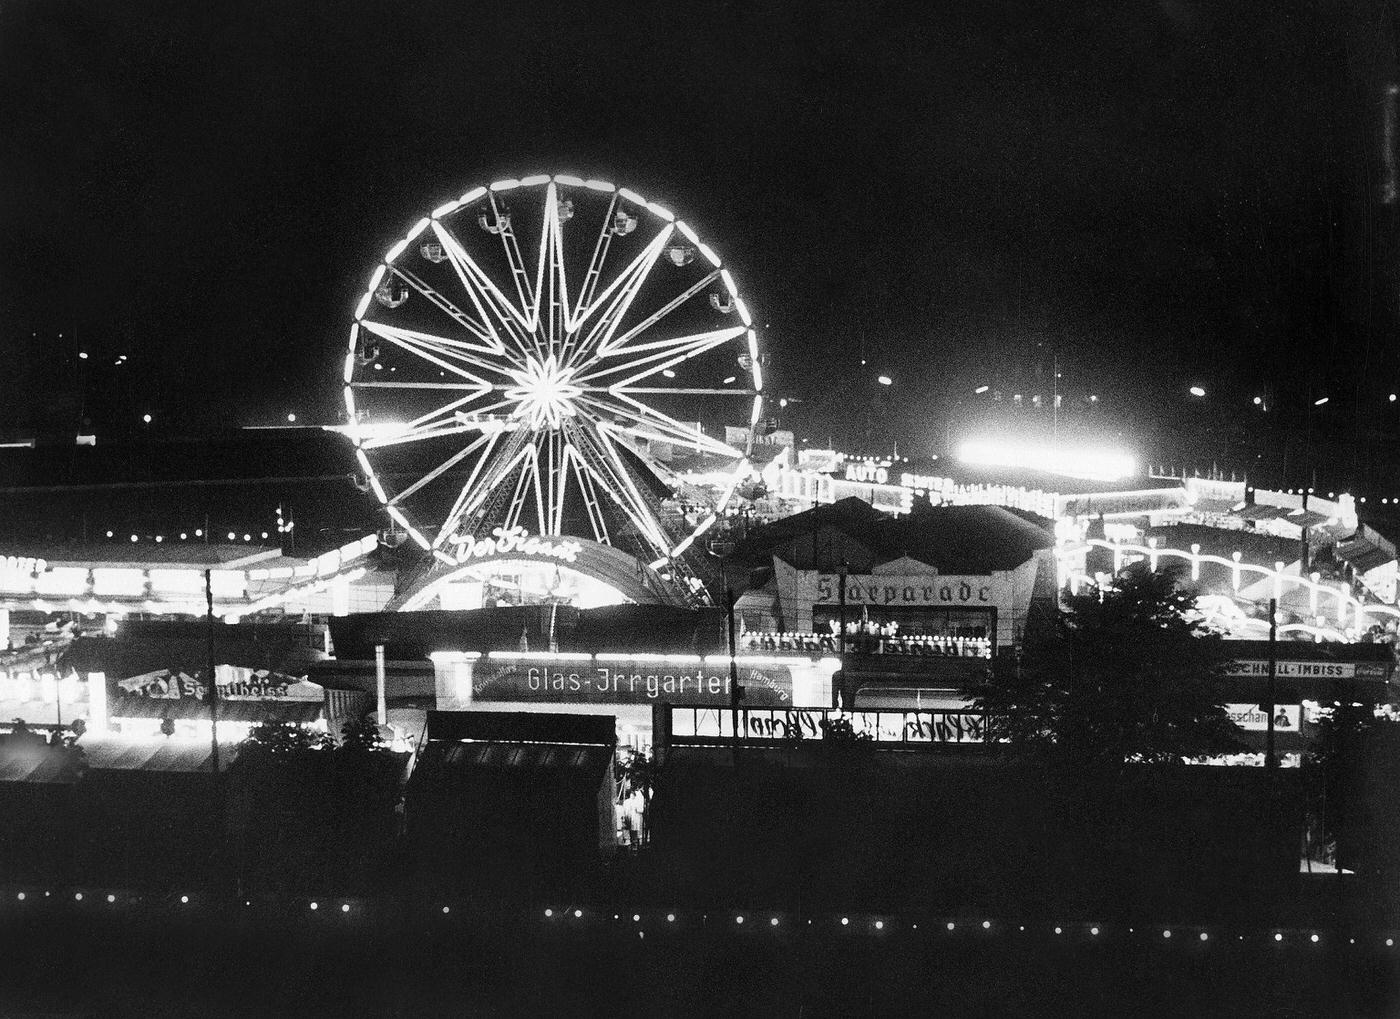 Oktoberfest Berlin with Riesenrad (Giant Wheel). 1963.